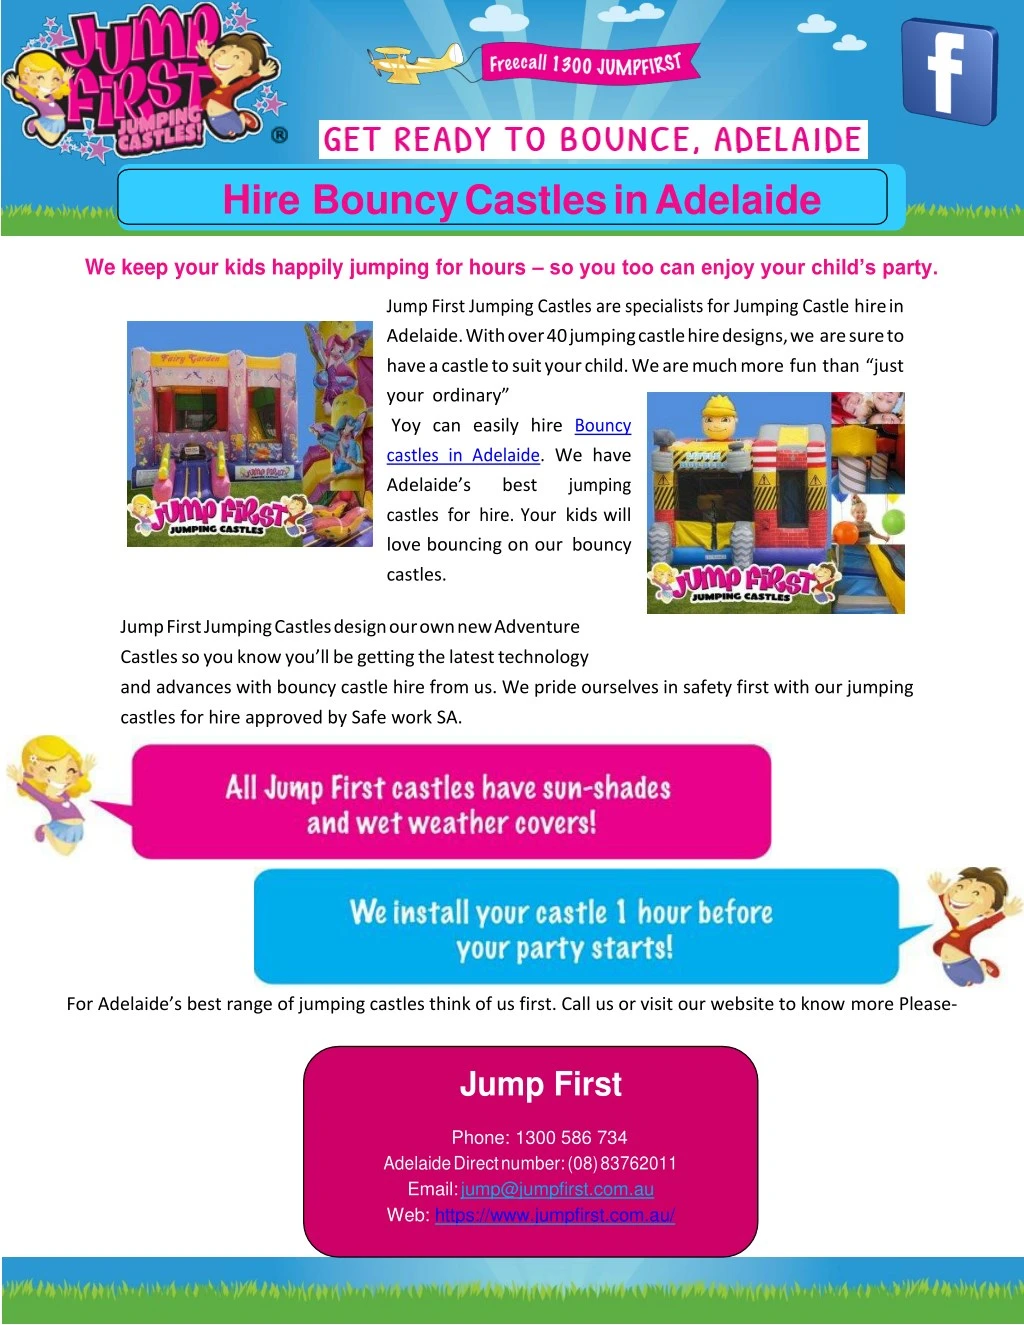 hire bouncy castles in adelaide